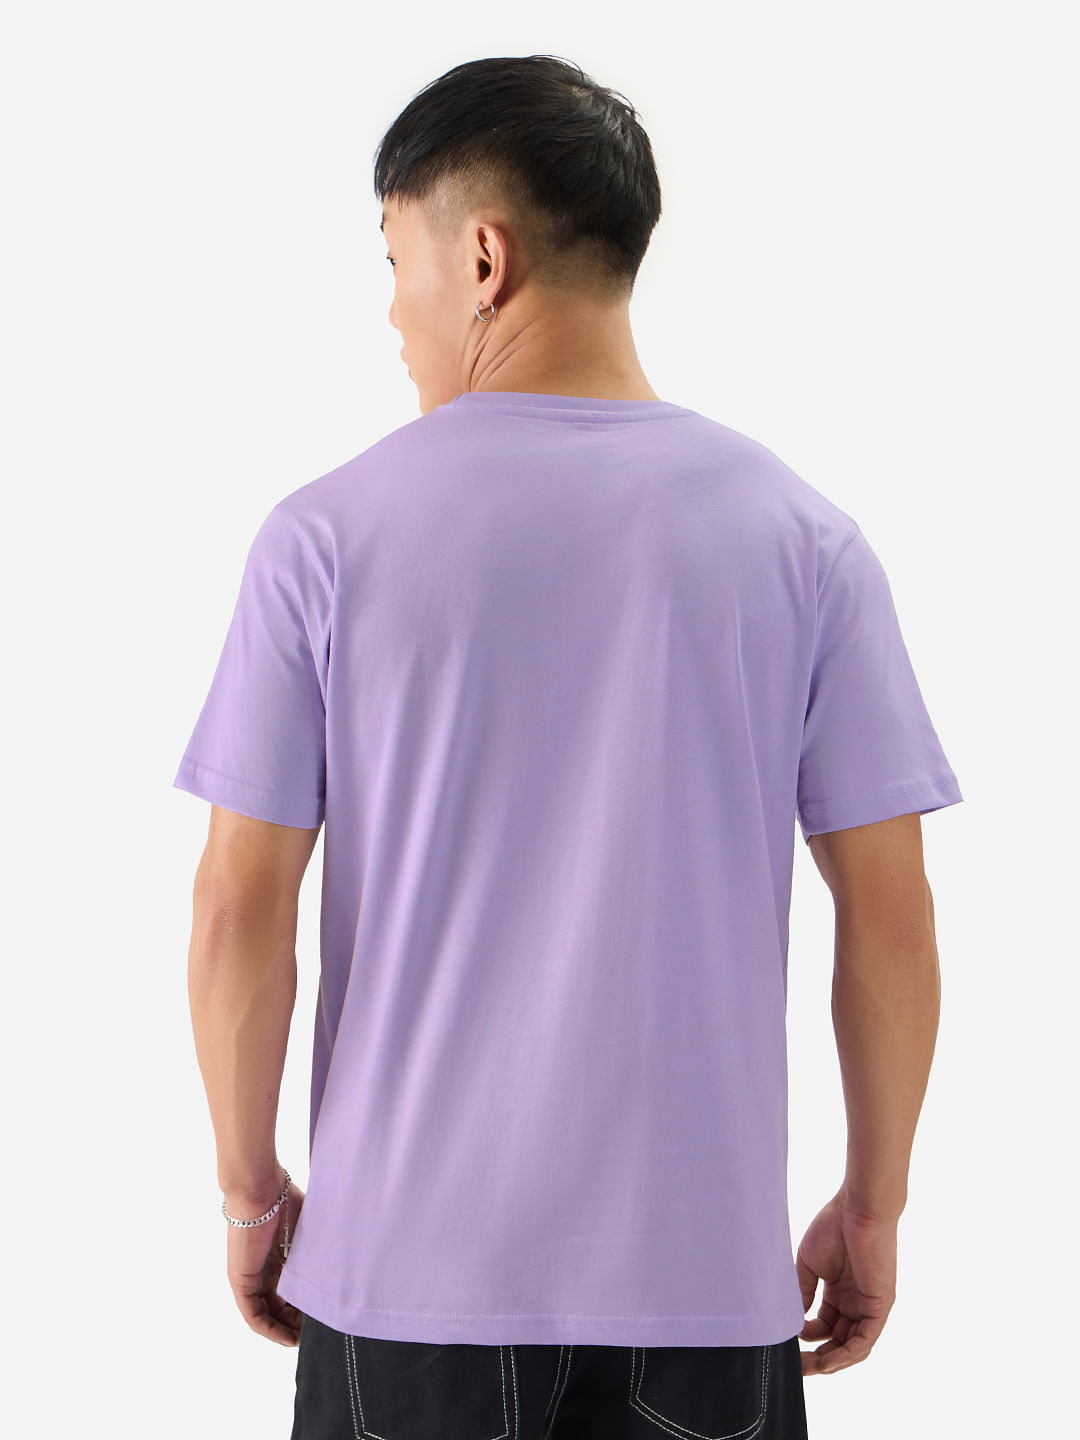 Buy Solids: Deep Lavender T-Shirts Online